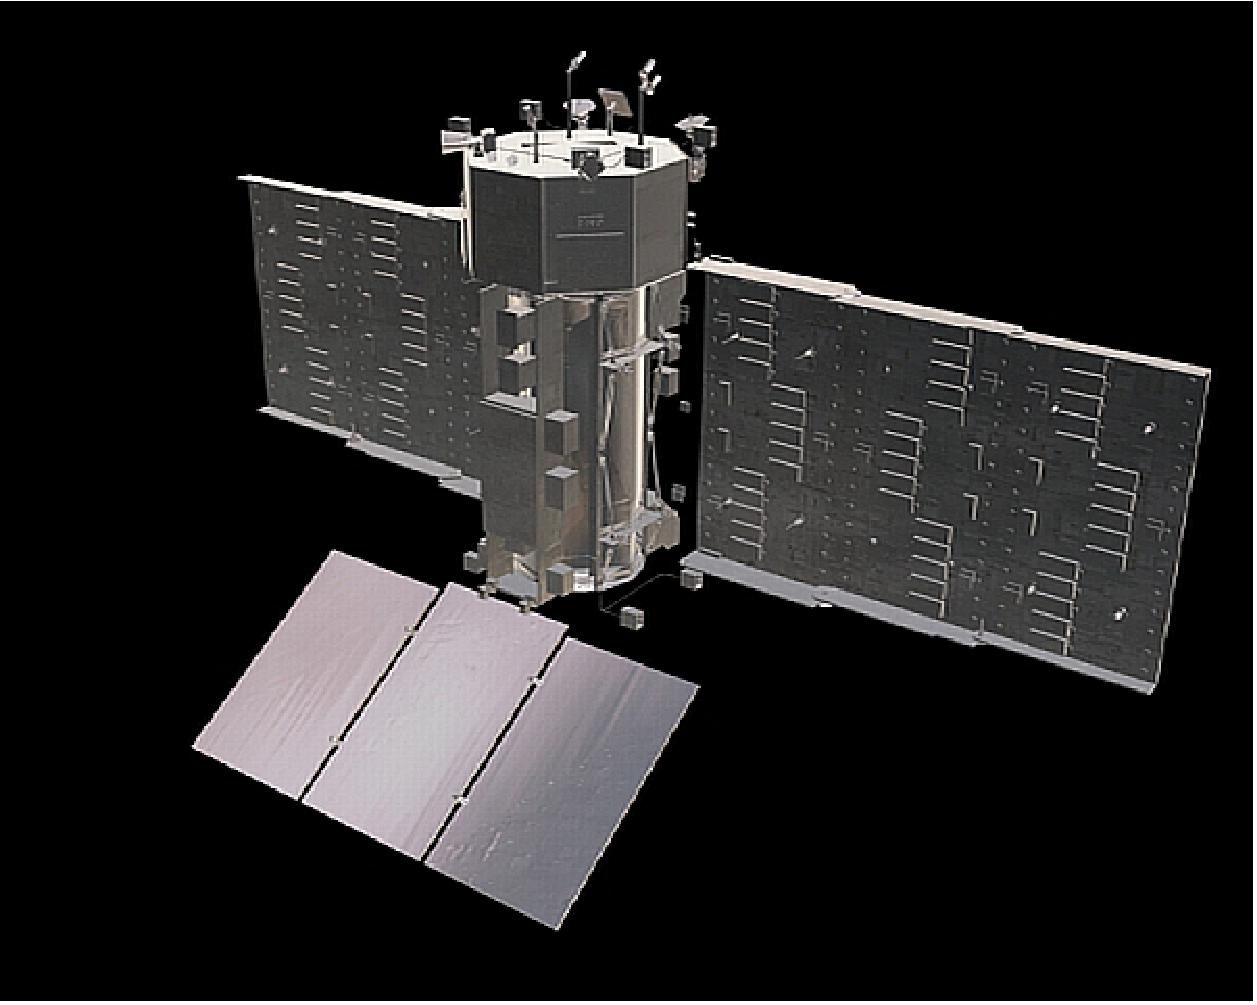 Figure 1: Illustration of the SAOCOM spacecraft (image credit: CONAE)